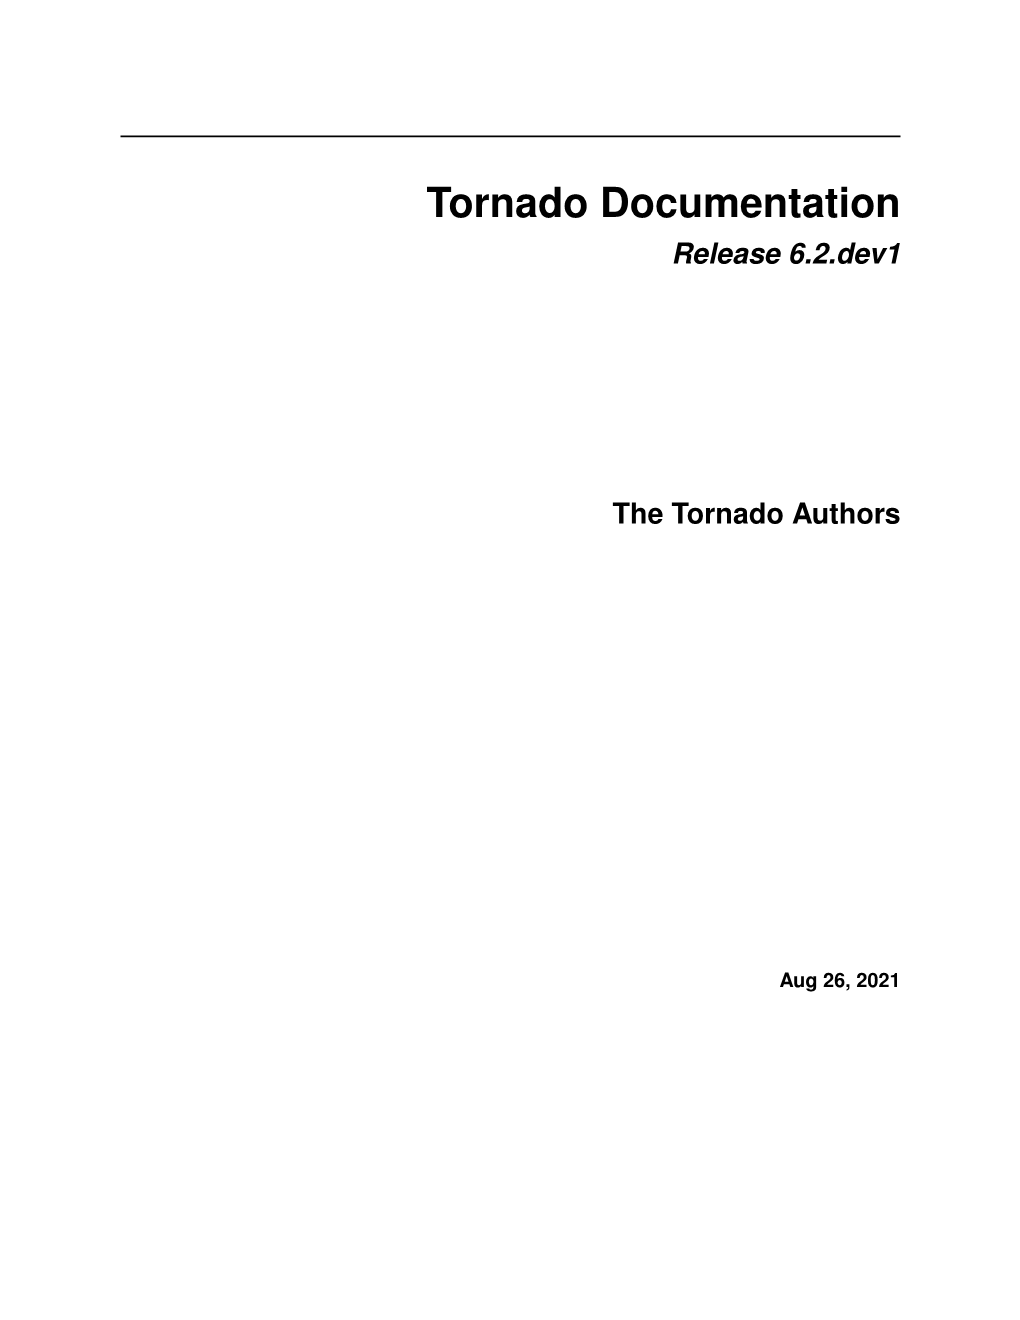 Tornado Documentation Release 6.2.Dev1